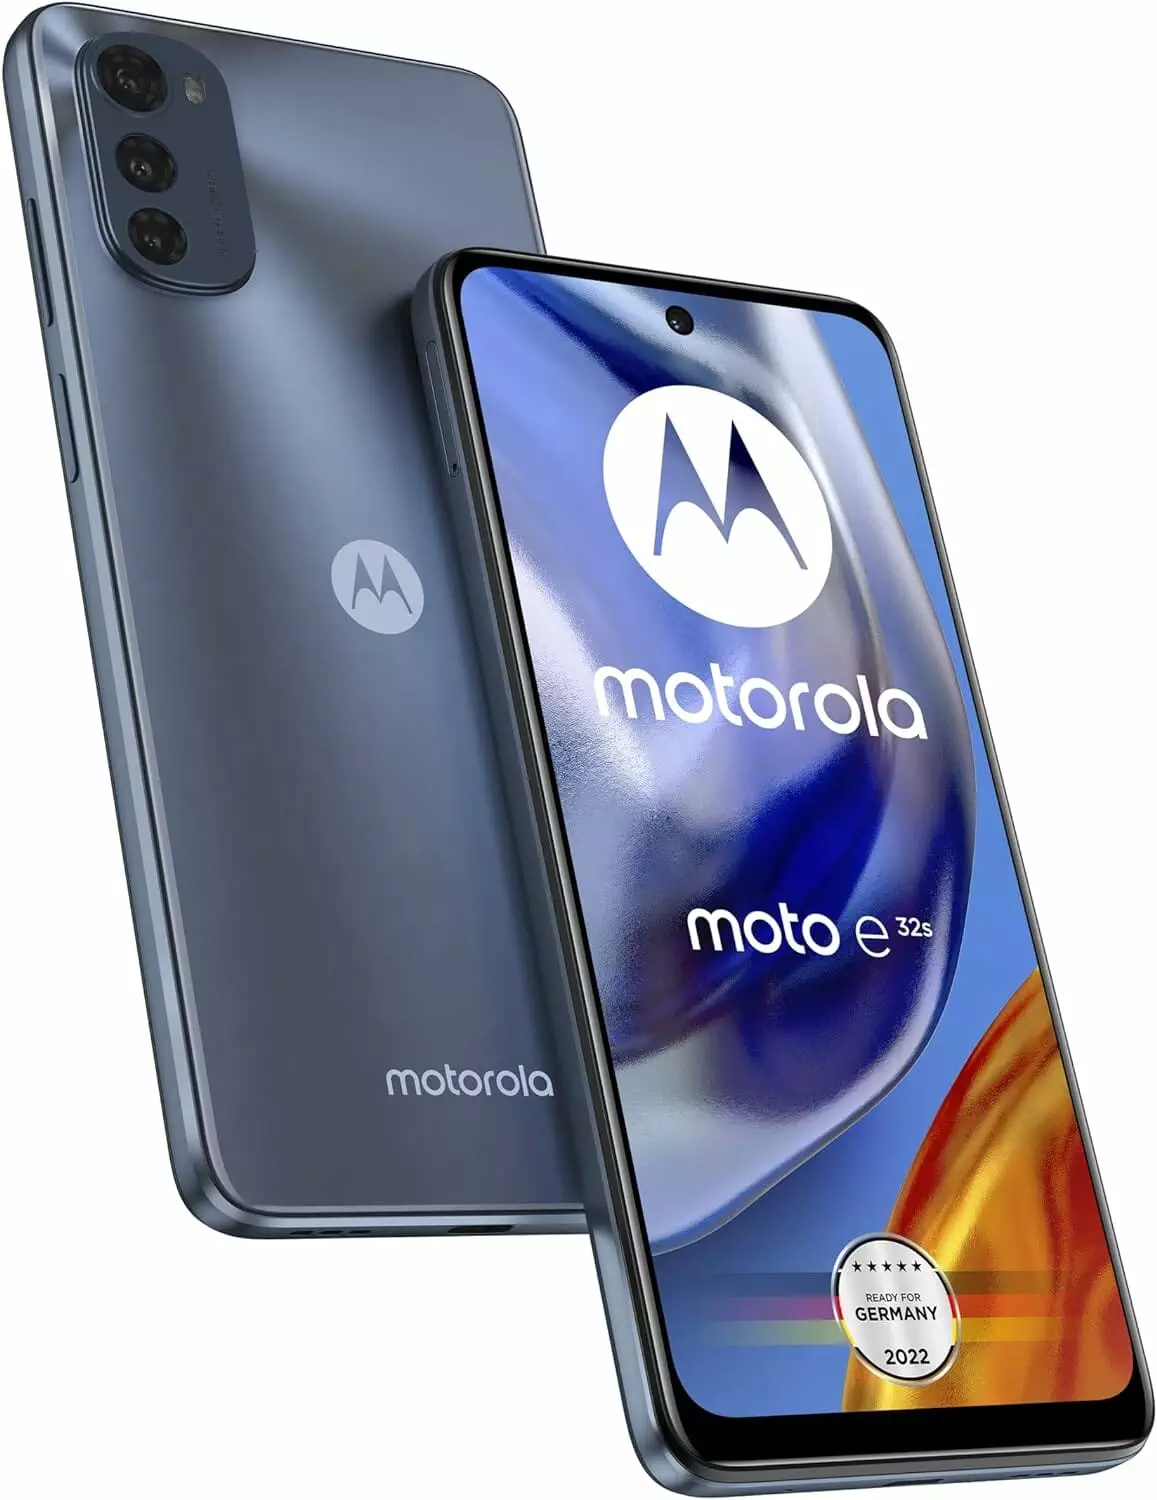 Motorola Moto e32s Smartphone (6.5 Inch HD+ Display, 16 MP Camera, 3/32 GB, 5000 mAh, Android 12), Slate Grey [Exclusive to Amazon]